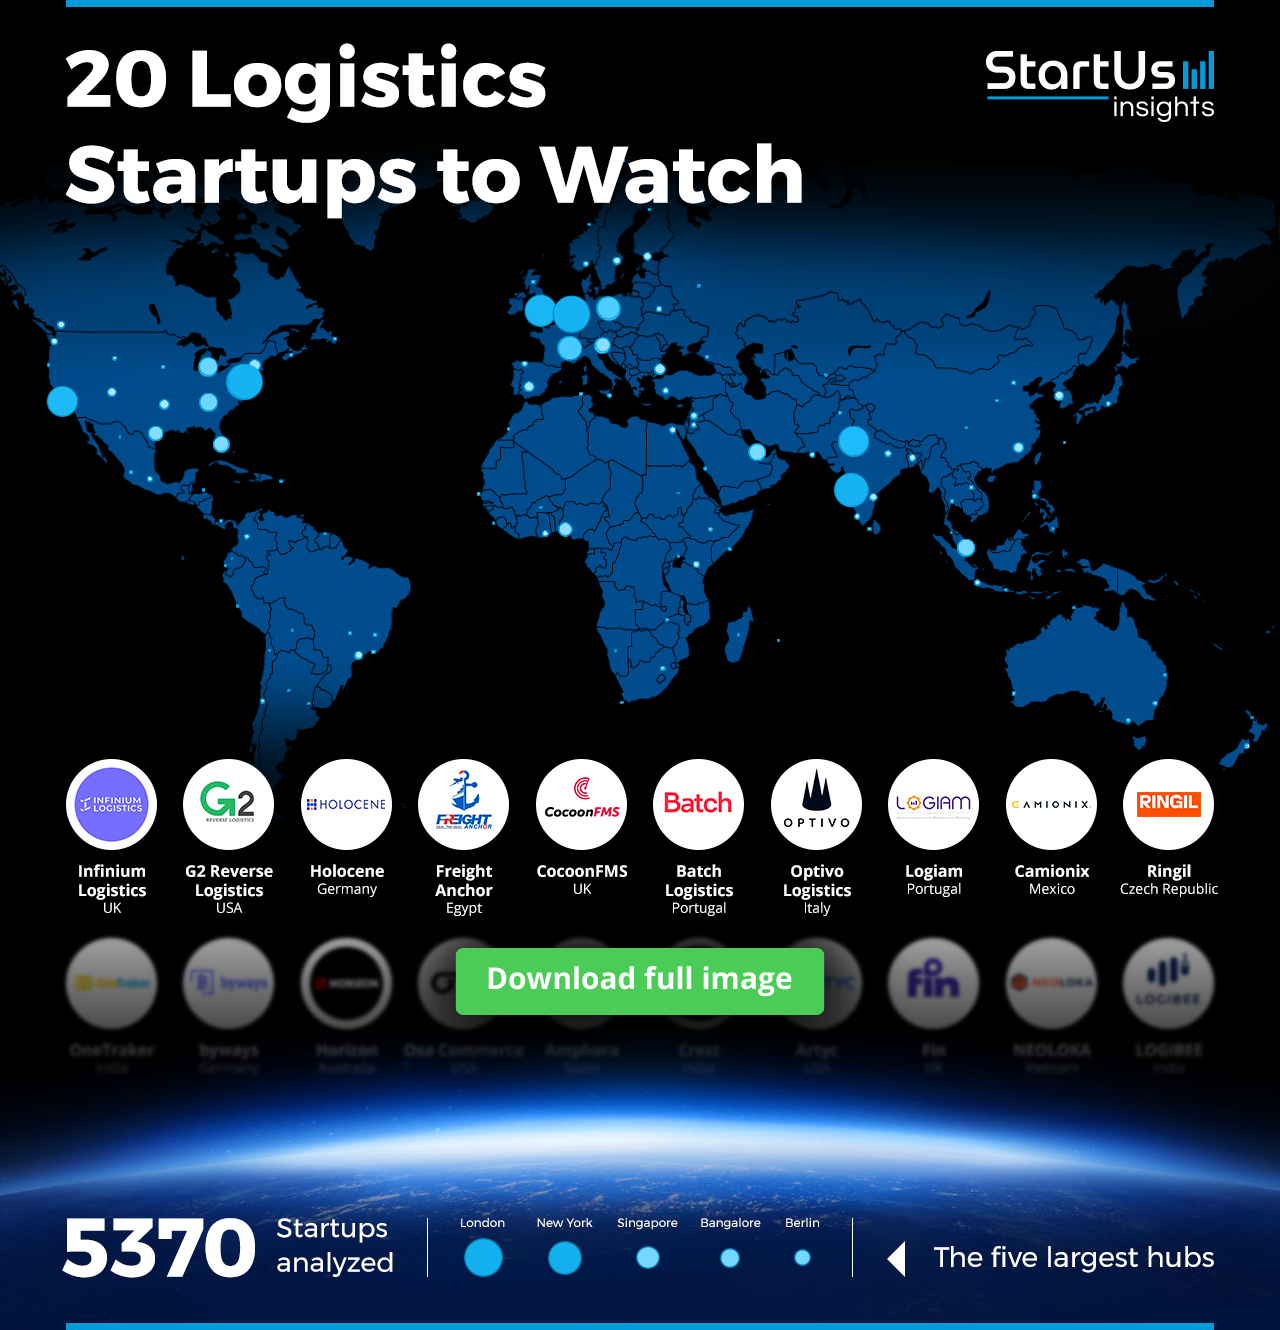 Logistics-Startups-to-Watch-Heat-Map-Blurred-StartUs-Insights-noresize